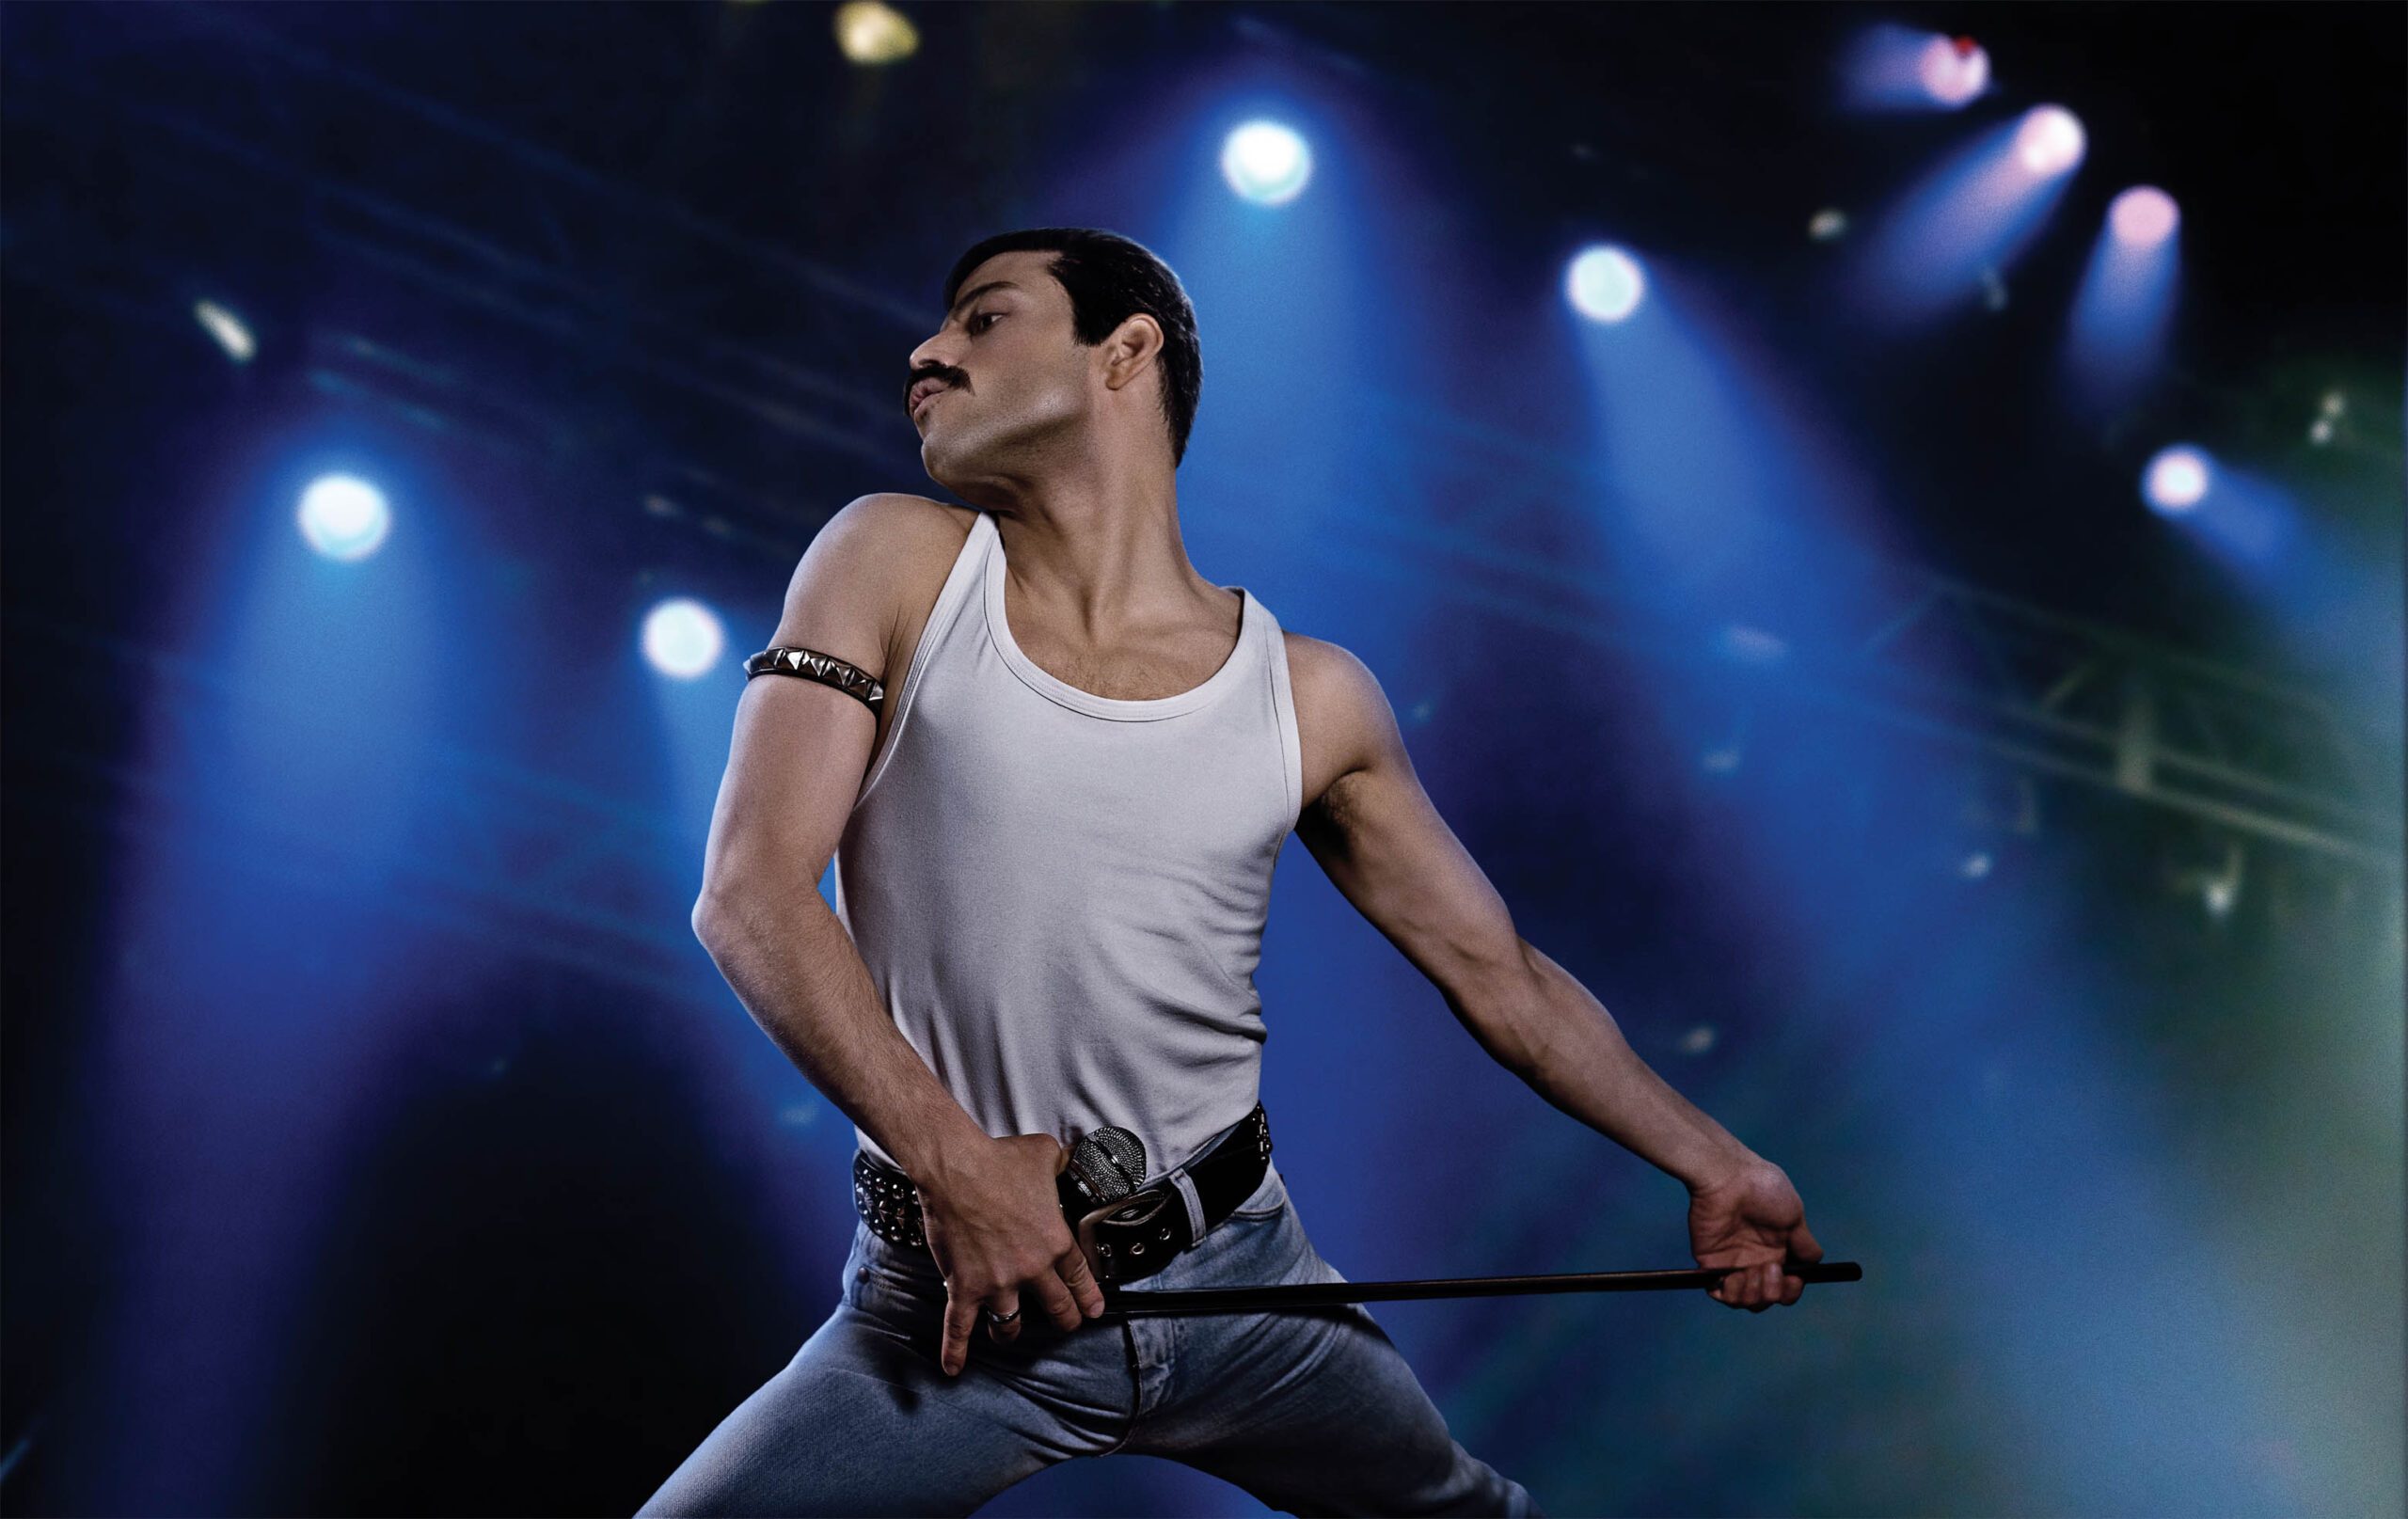 LOOK: Rami Malek transforms into Freddie Mercury for Queen biopic